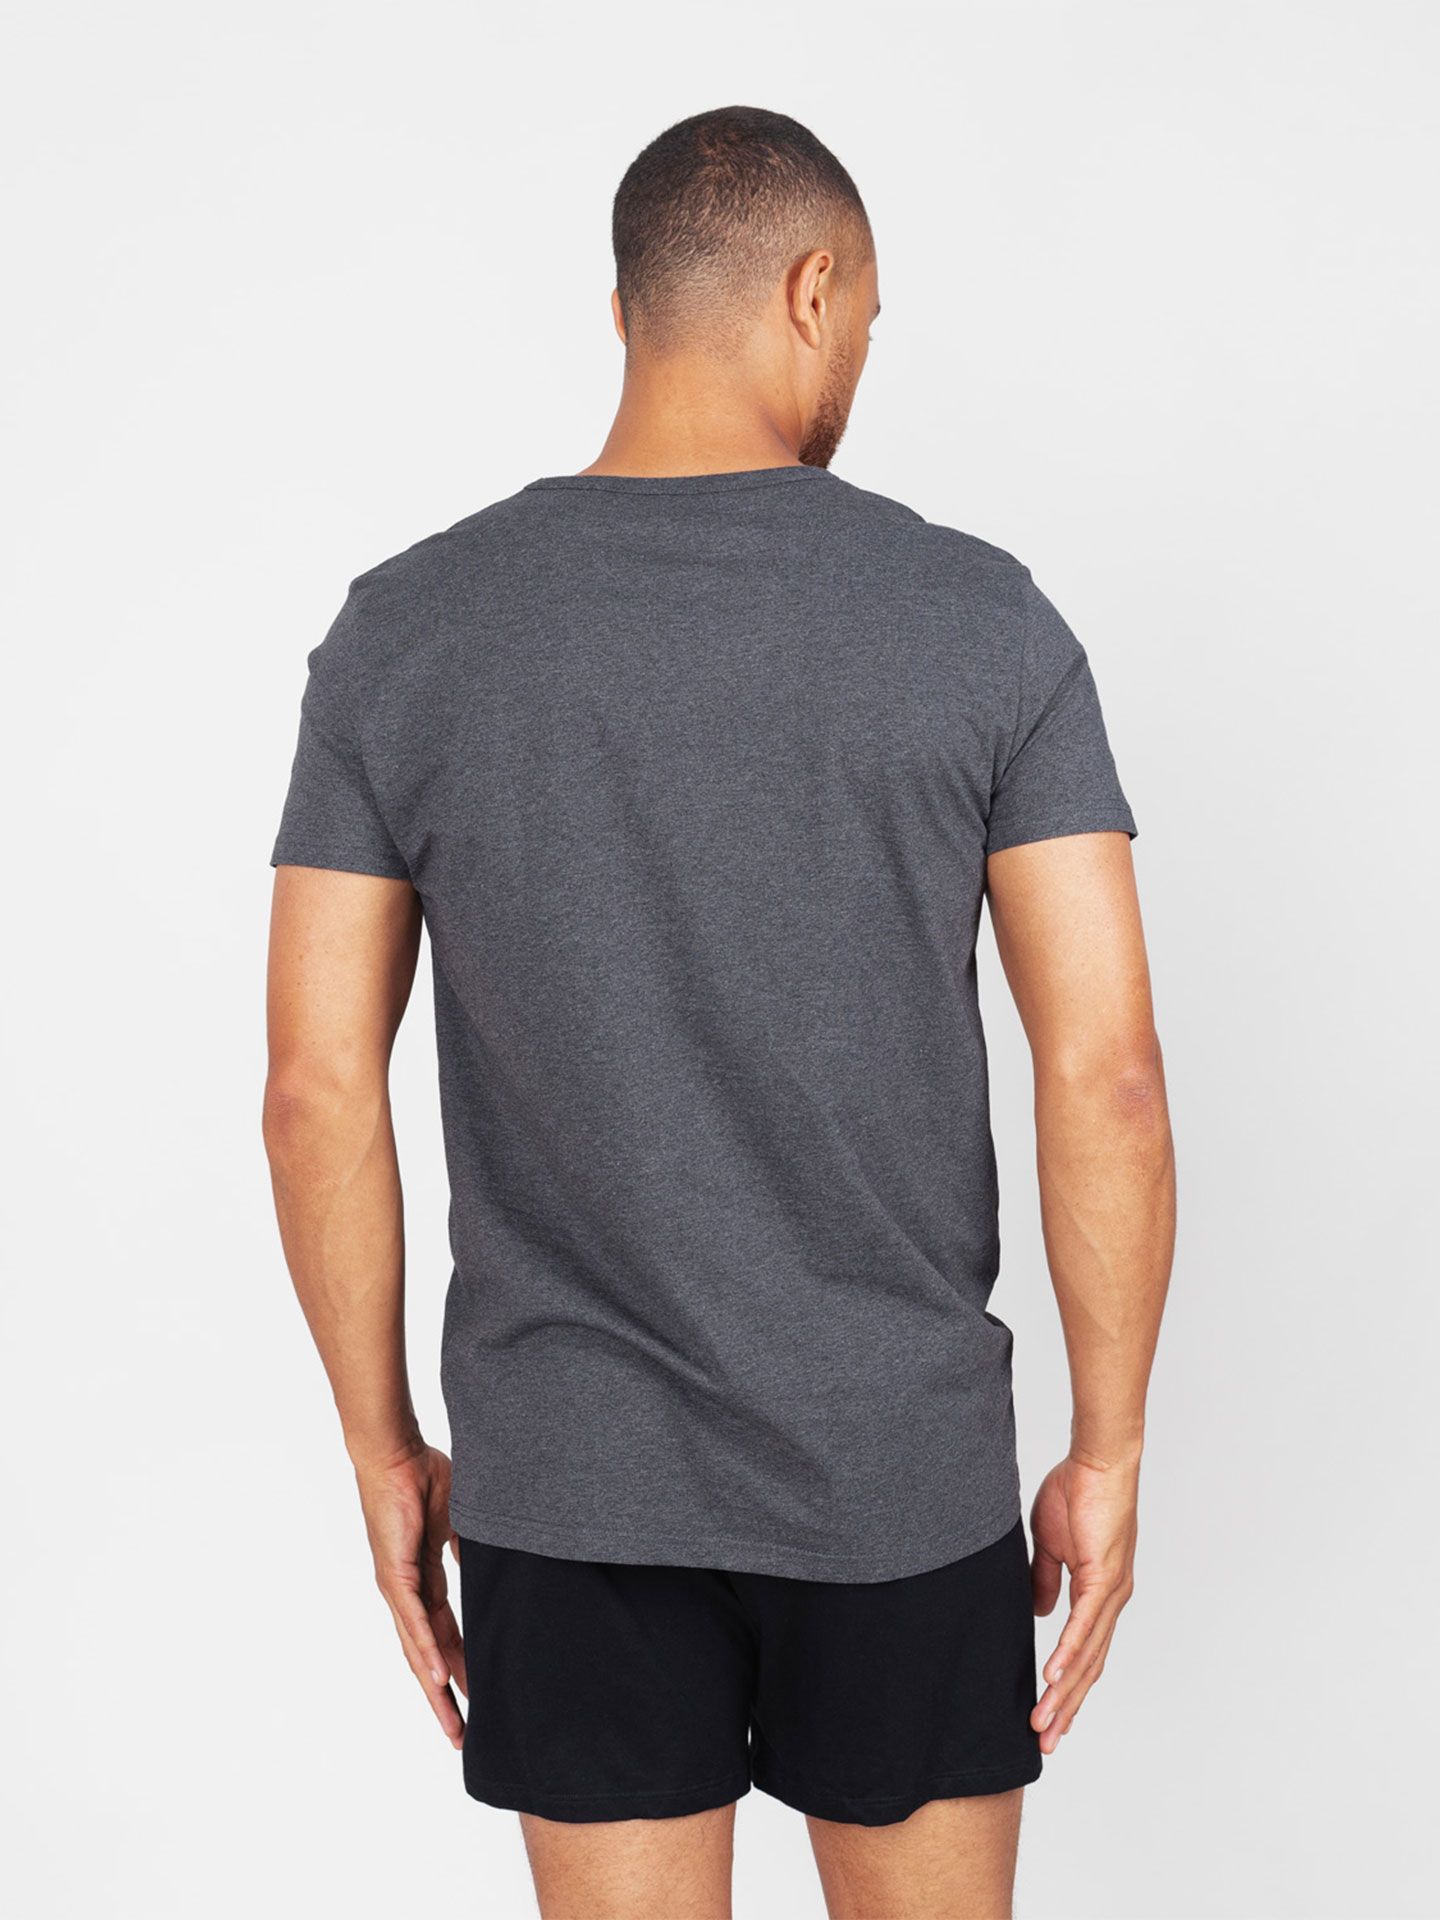 Paul T-Shirt schwarz-melange M